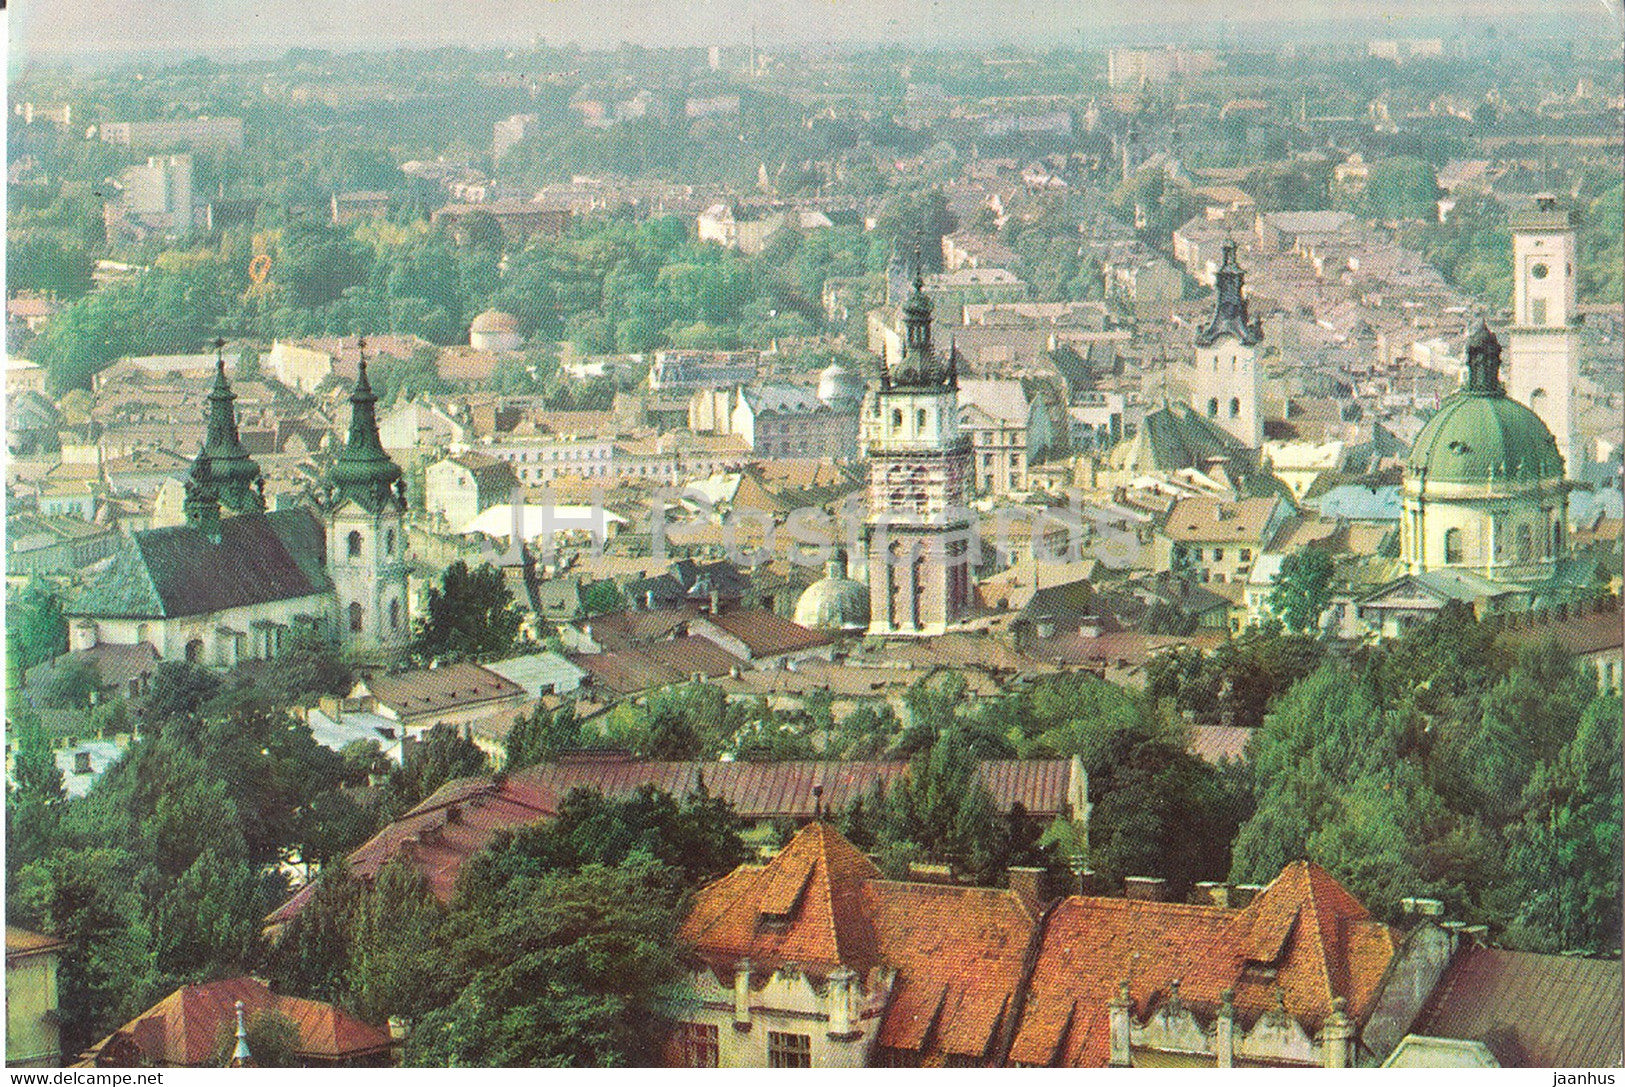 Lviv - Lvov - panorama of the city from Visoky Zamok (High Castle) - 1970 - Ukraine USSR - unused - JH Postcards